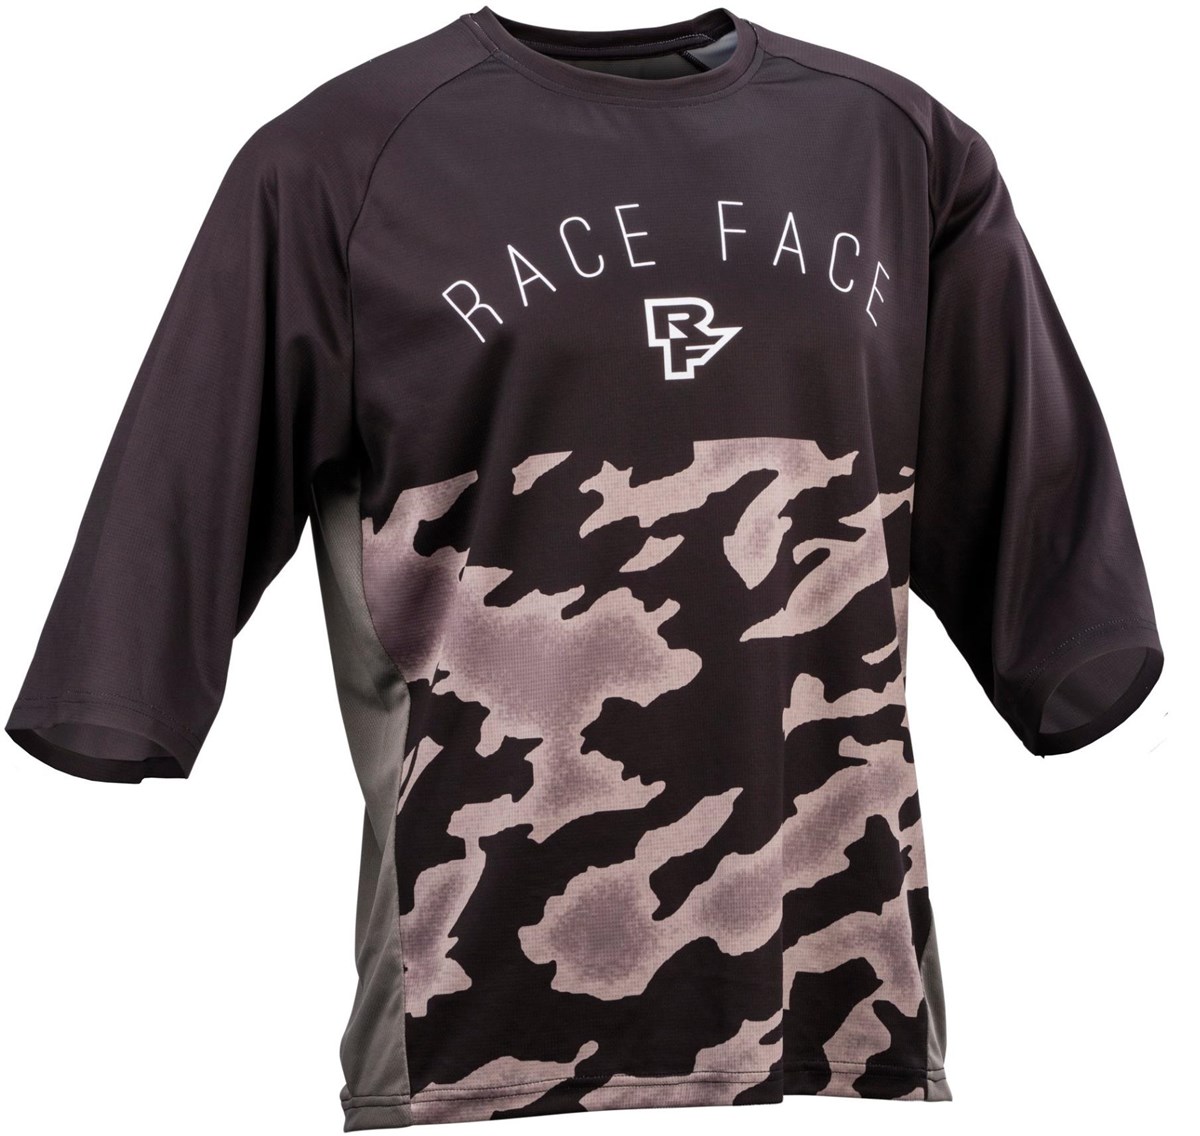 Race Face Ambush 3/4 Sleeve Jersey product image